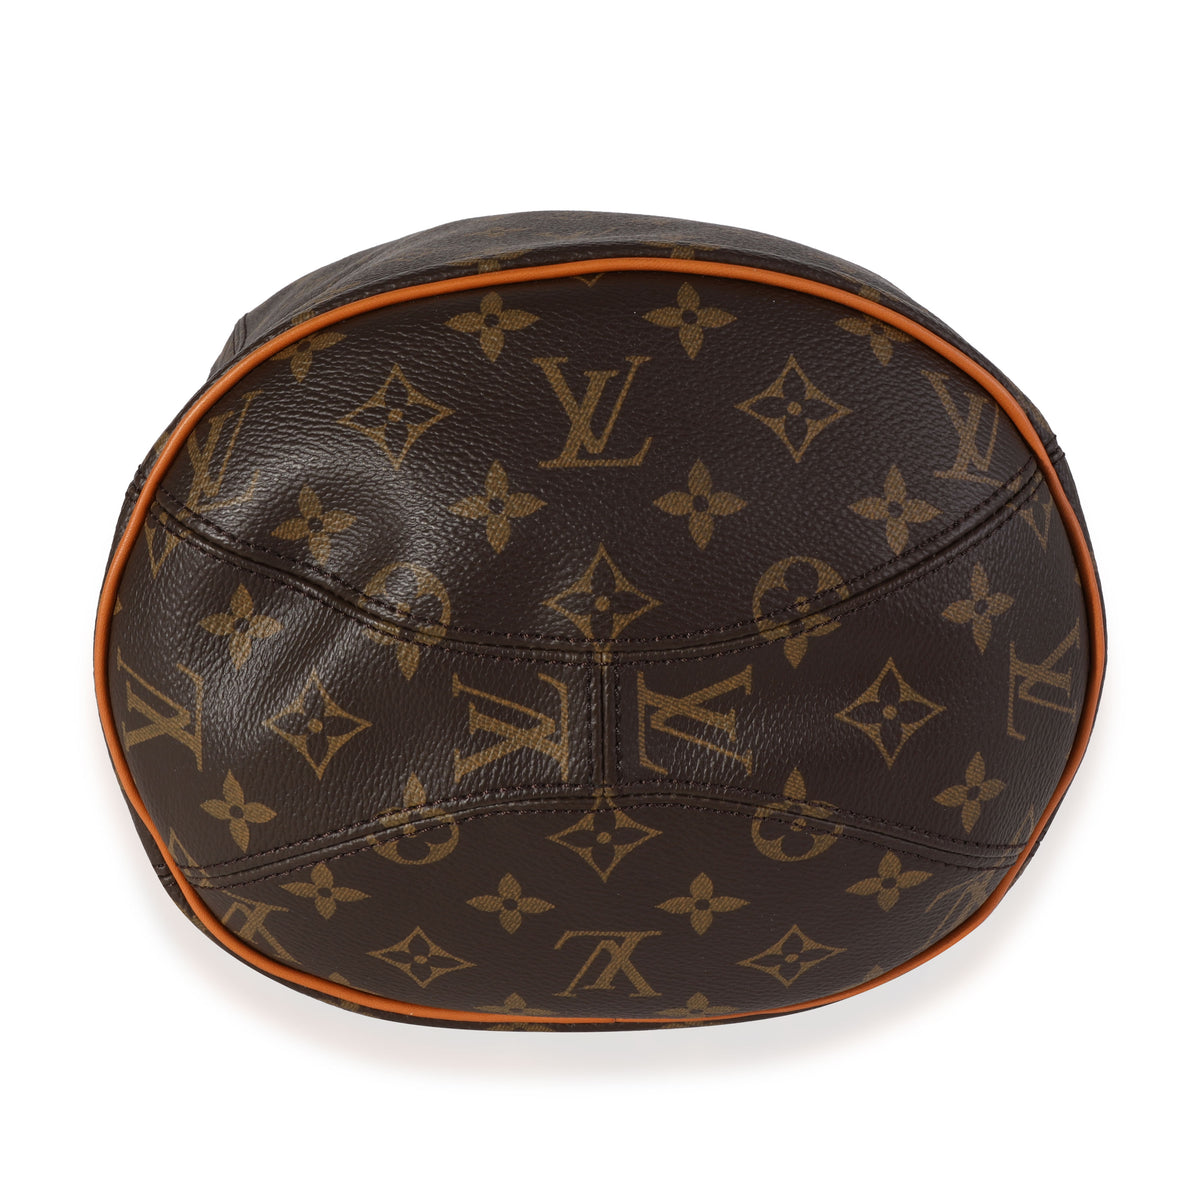 Louis Vuitton x Karl Lagerfeld 2014 Pre-owned Monogram PM Punching Bag - Brown